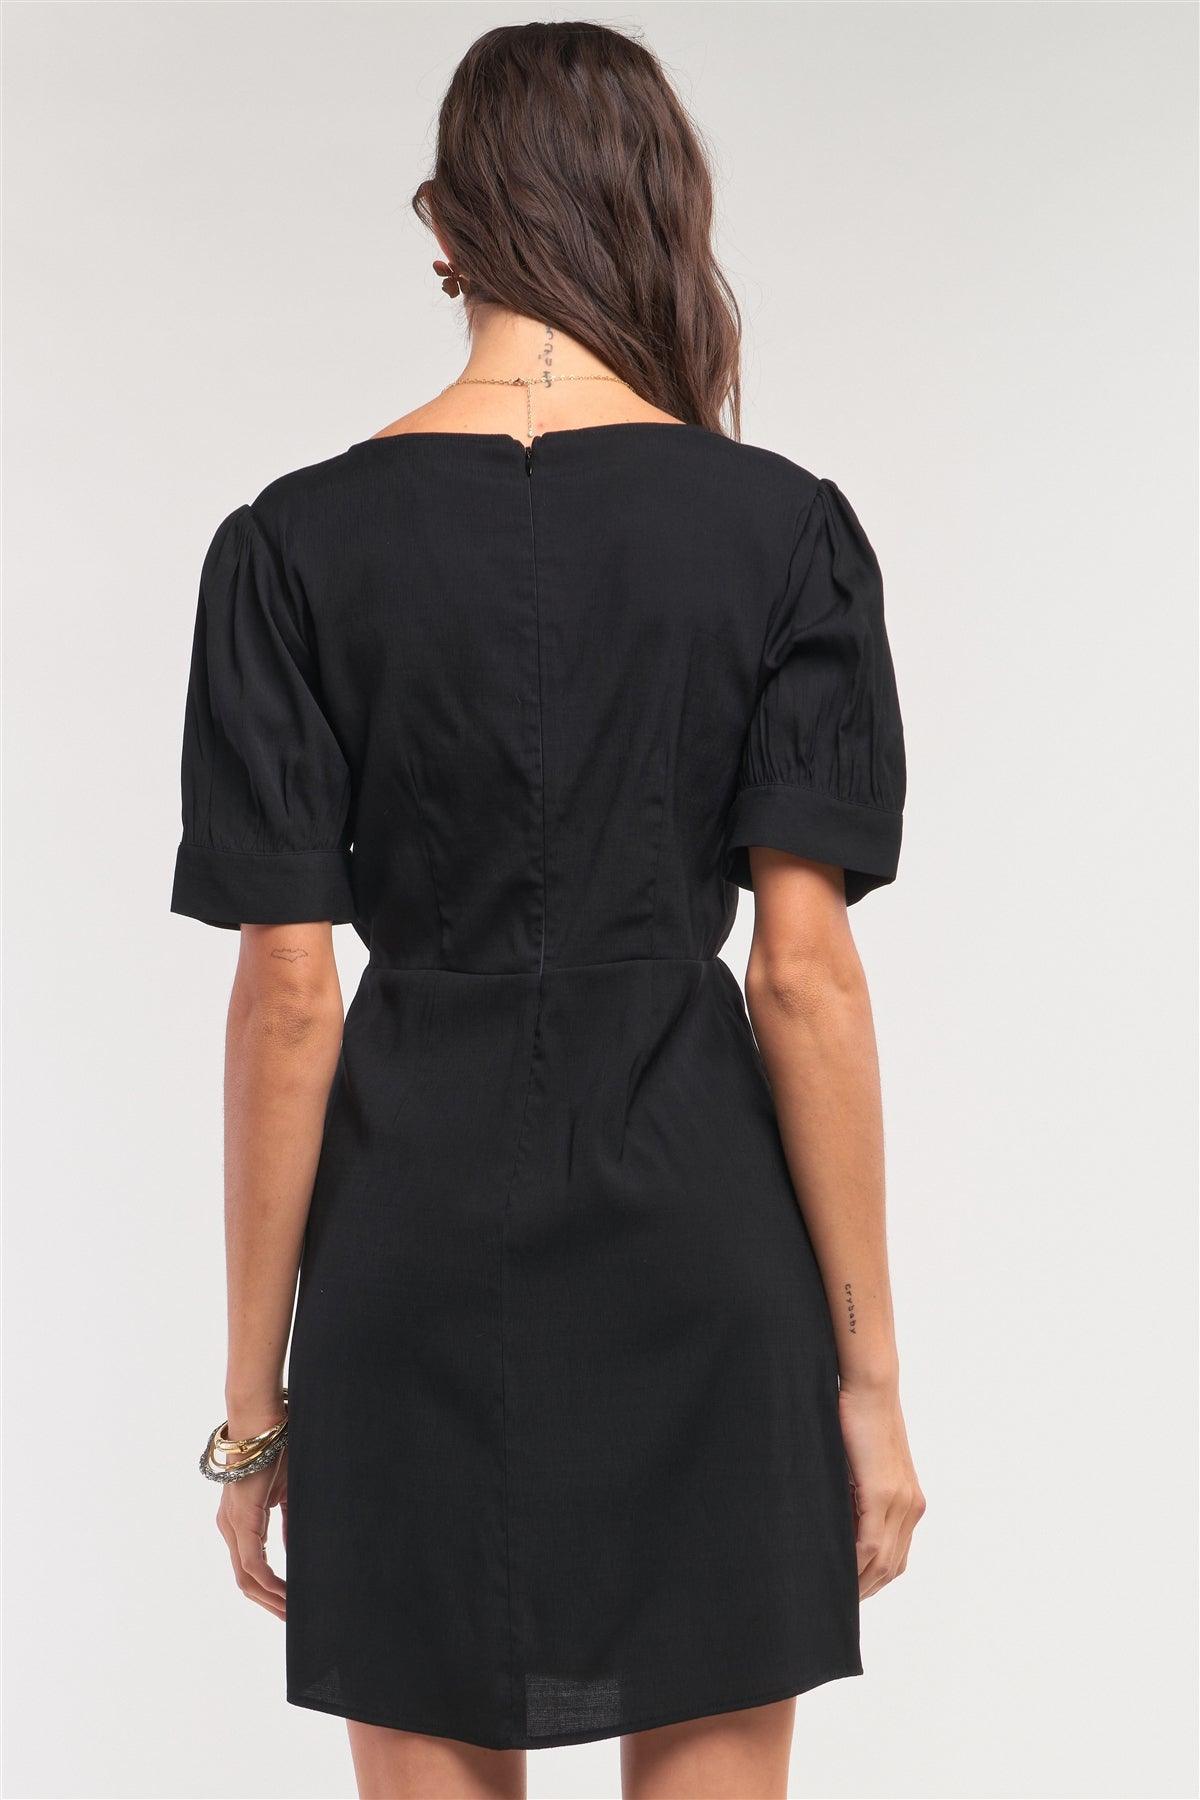 Black V-Neck Twist Front Detail Mini Dress /1-2-2